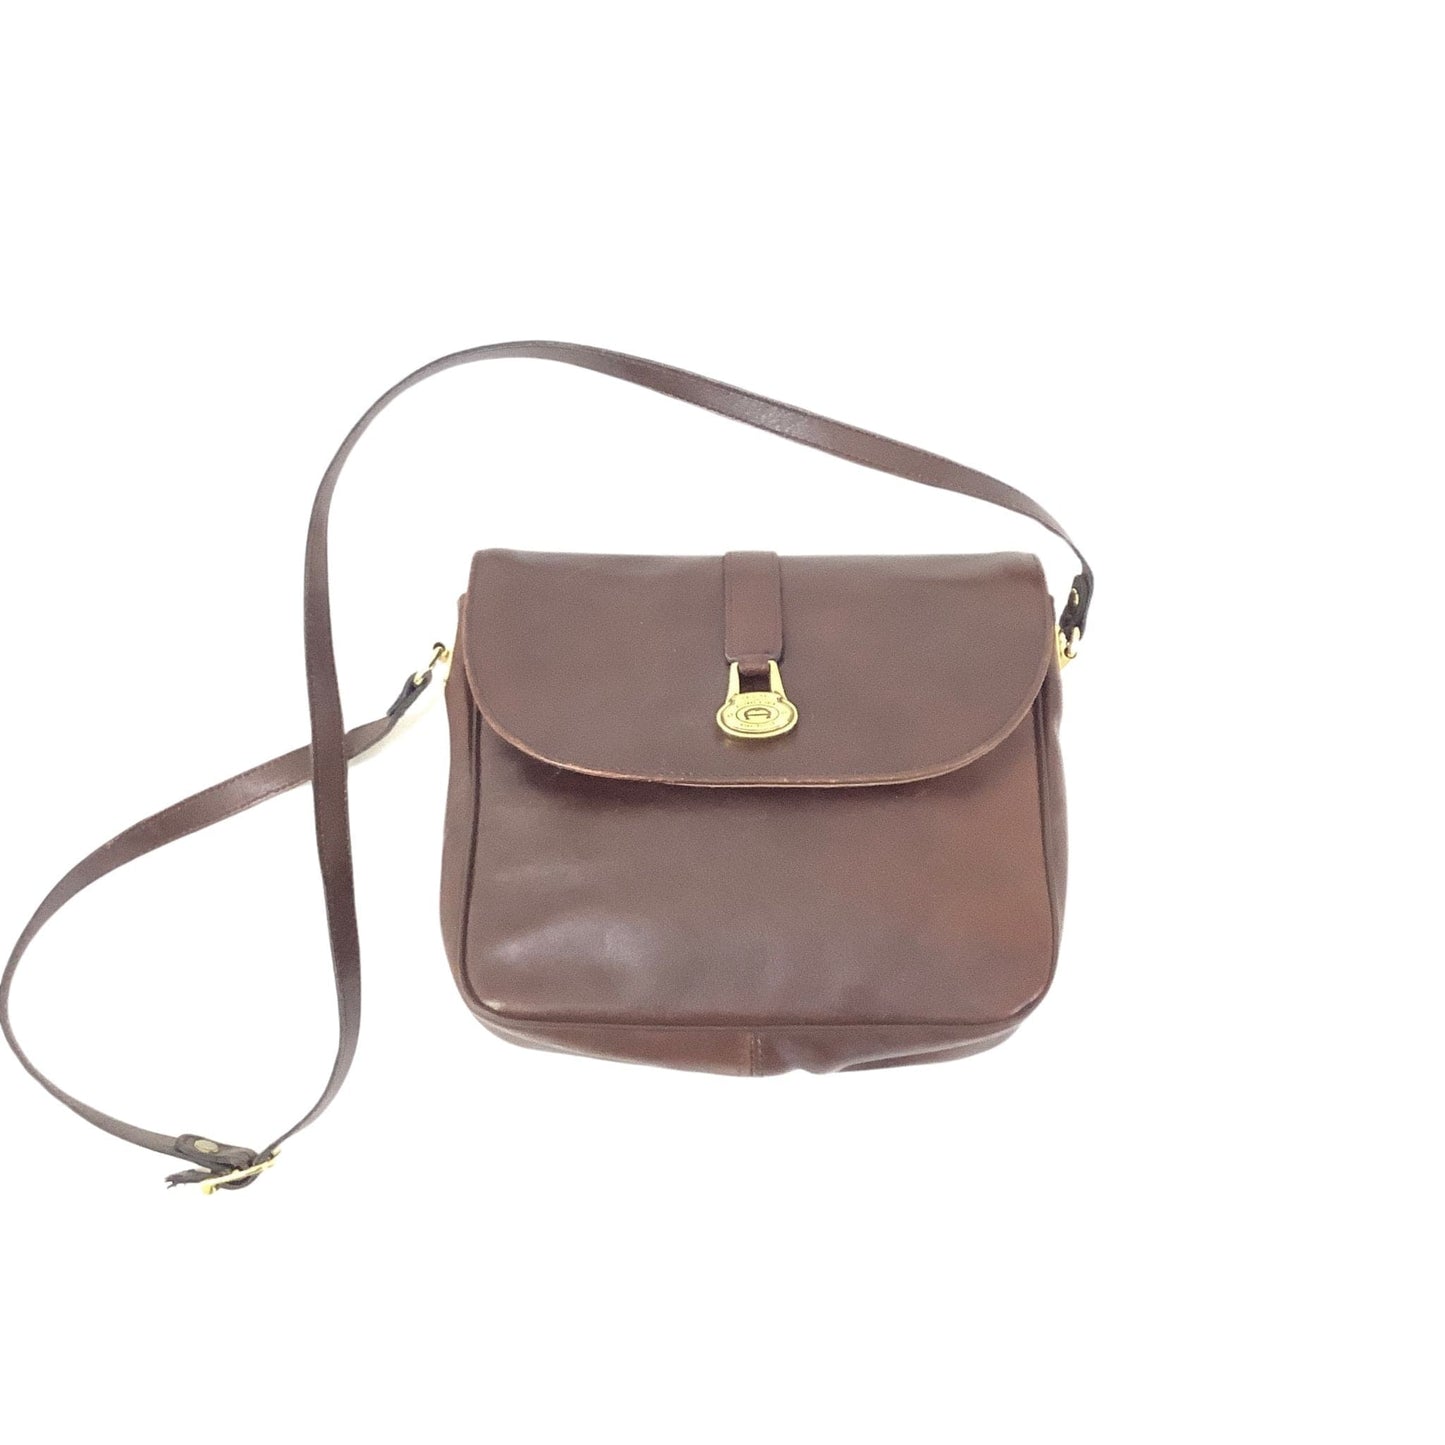 Vintage Brown Leather Bag Brown / Leather / Vintage 1980s